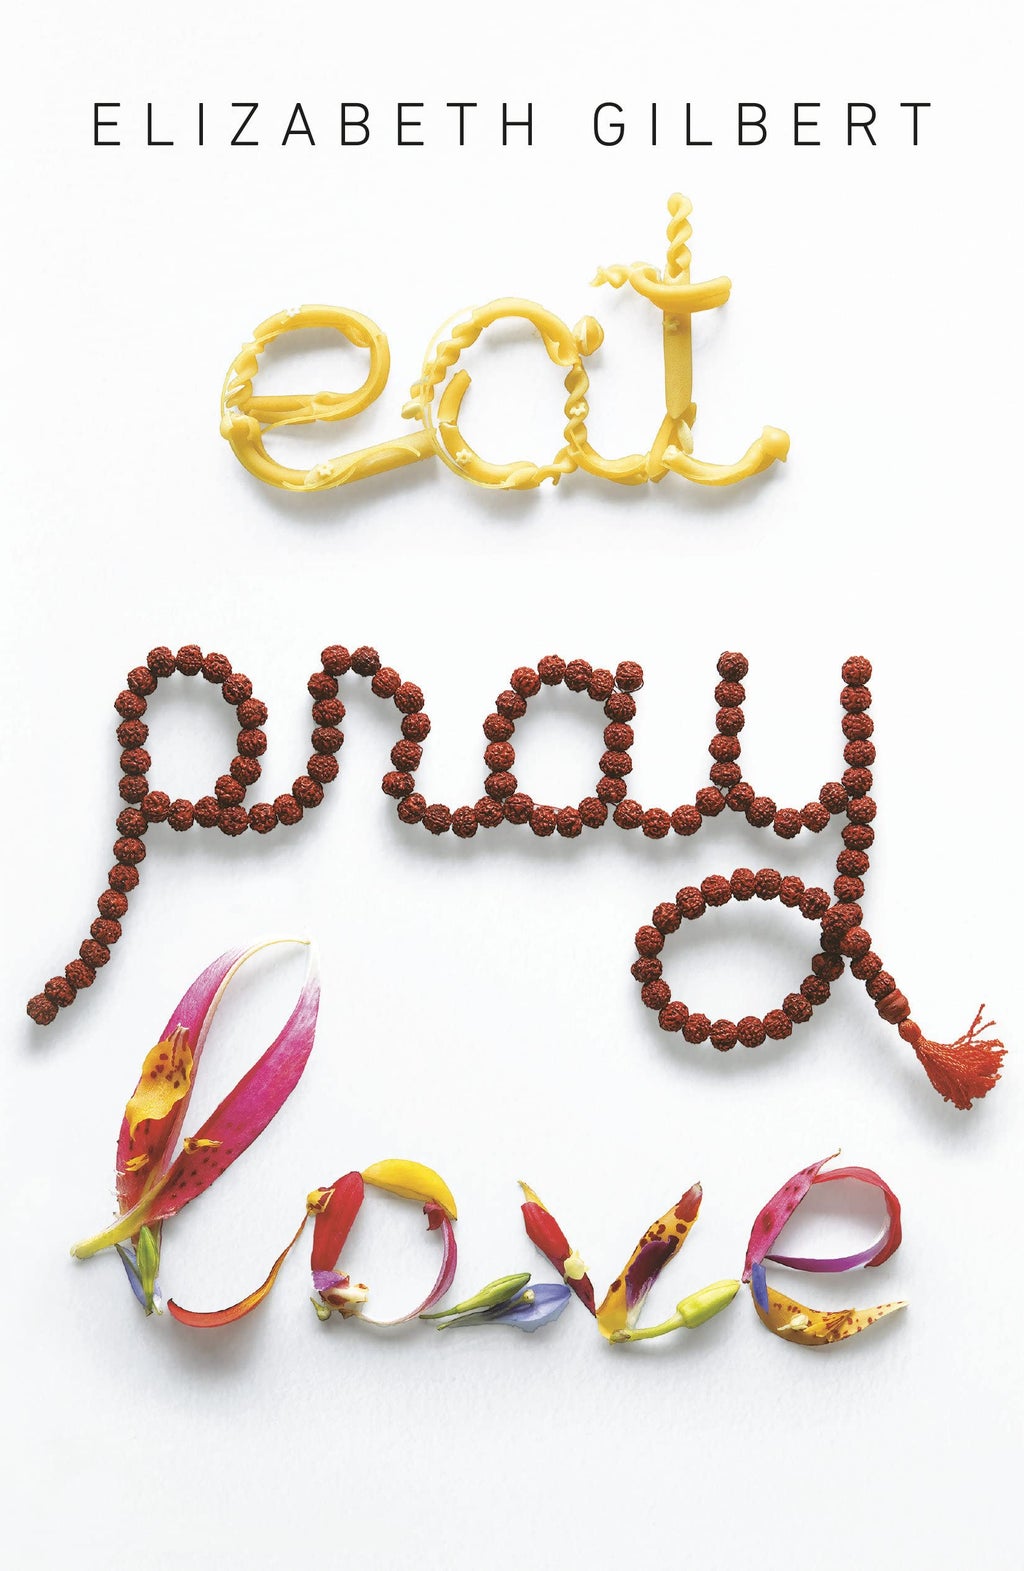 Cover of “Eat, Pray, Love”, by Elizabeth Gilbert